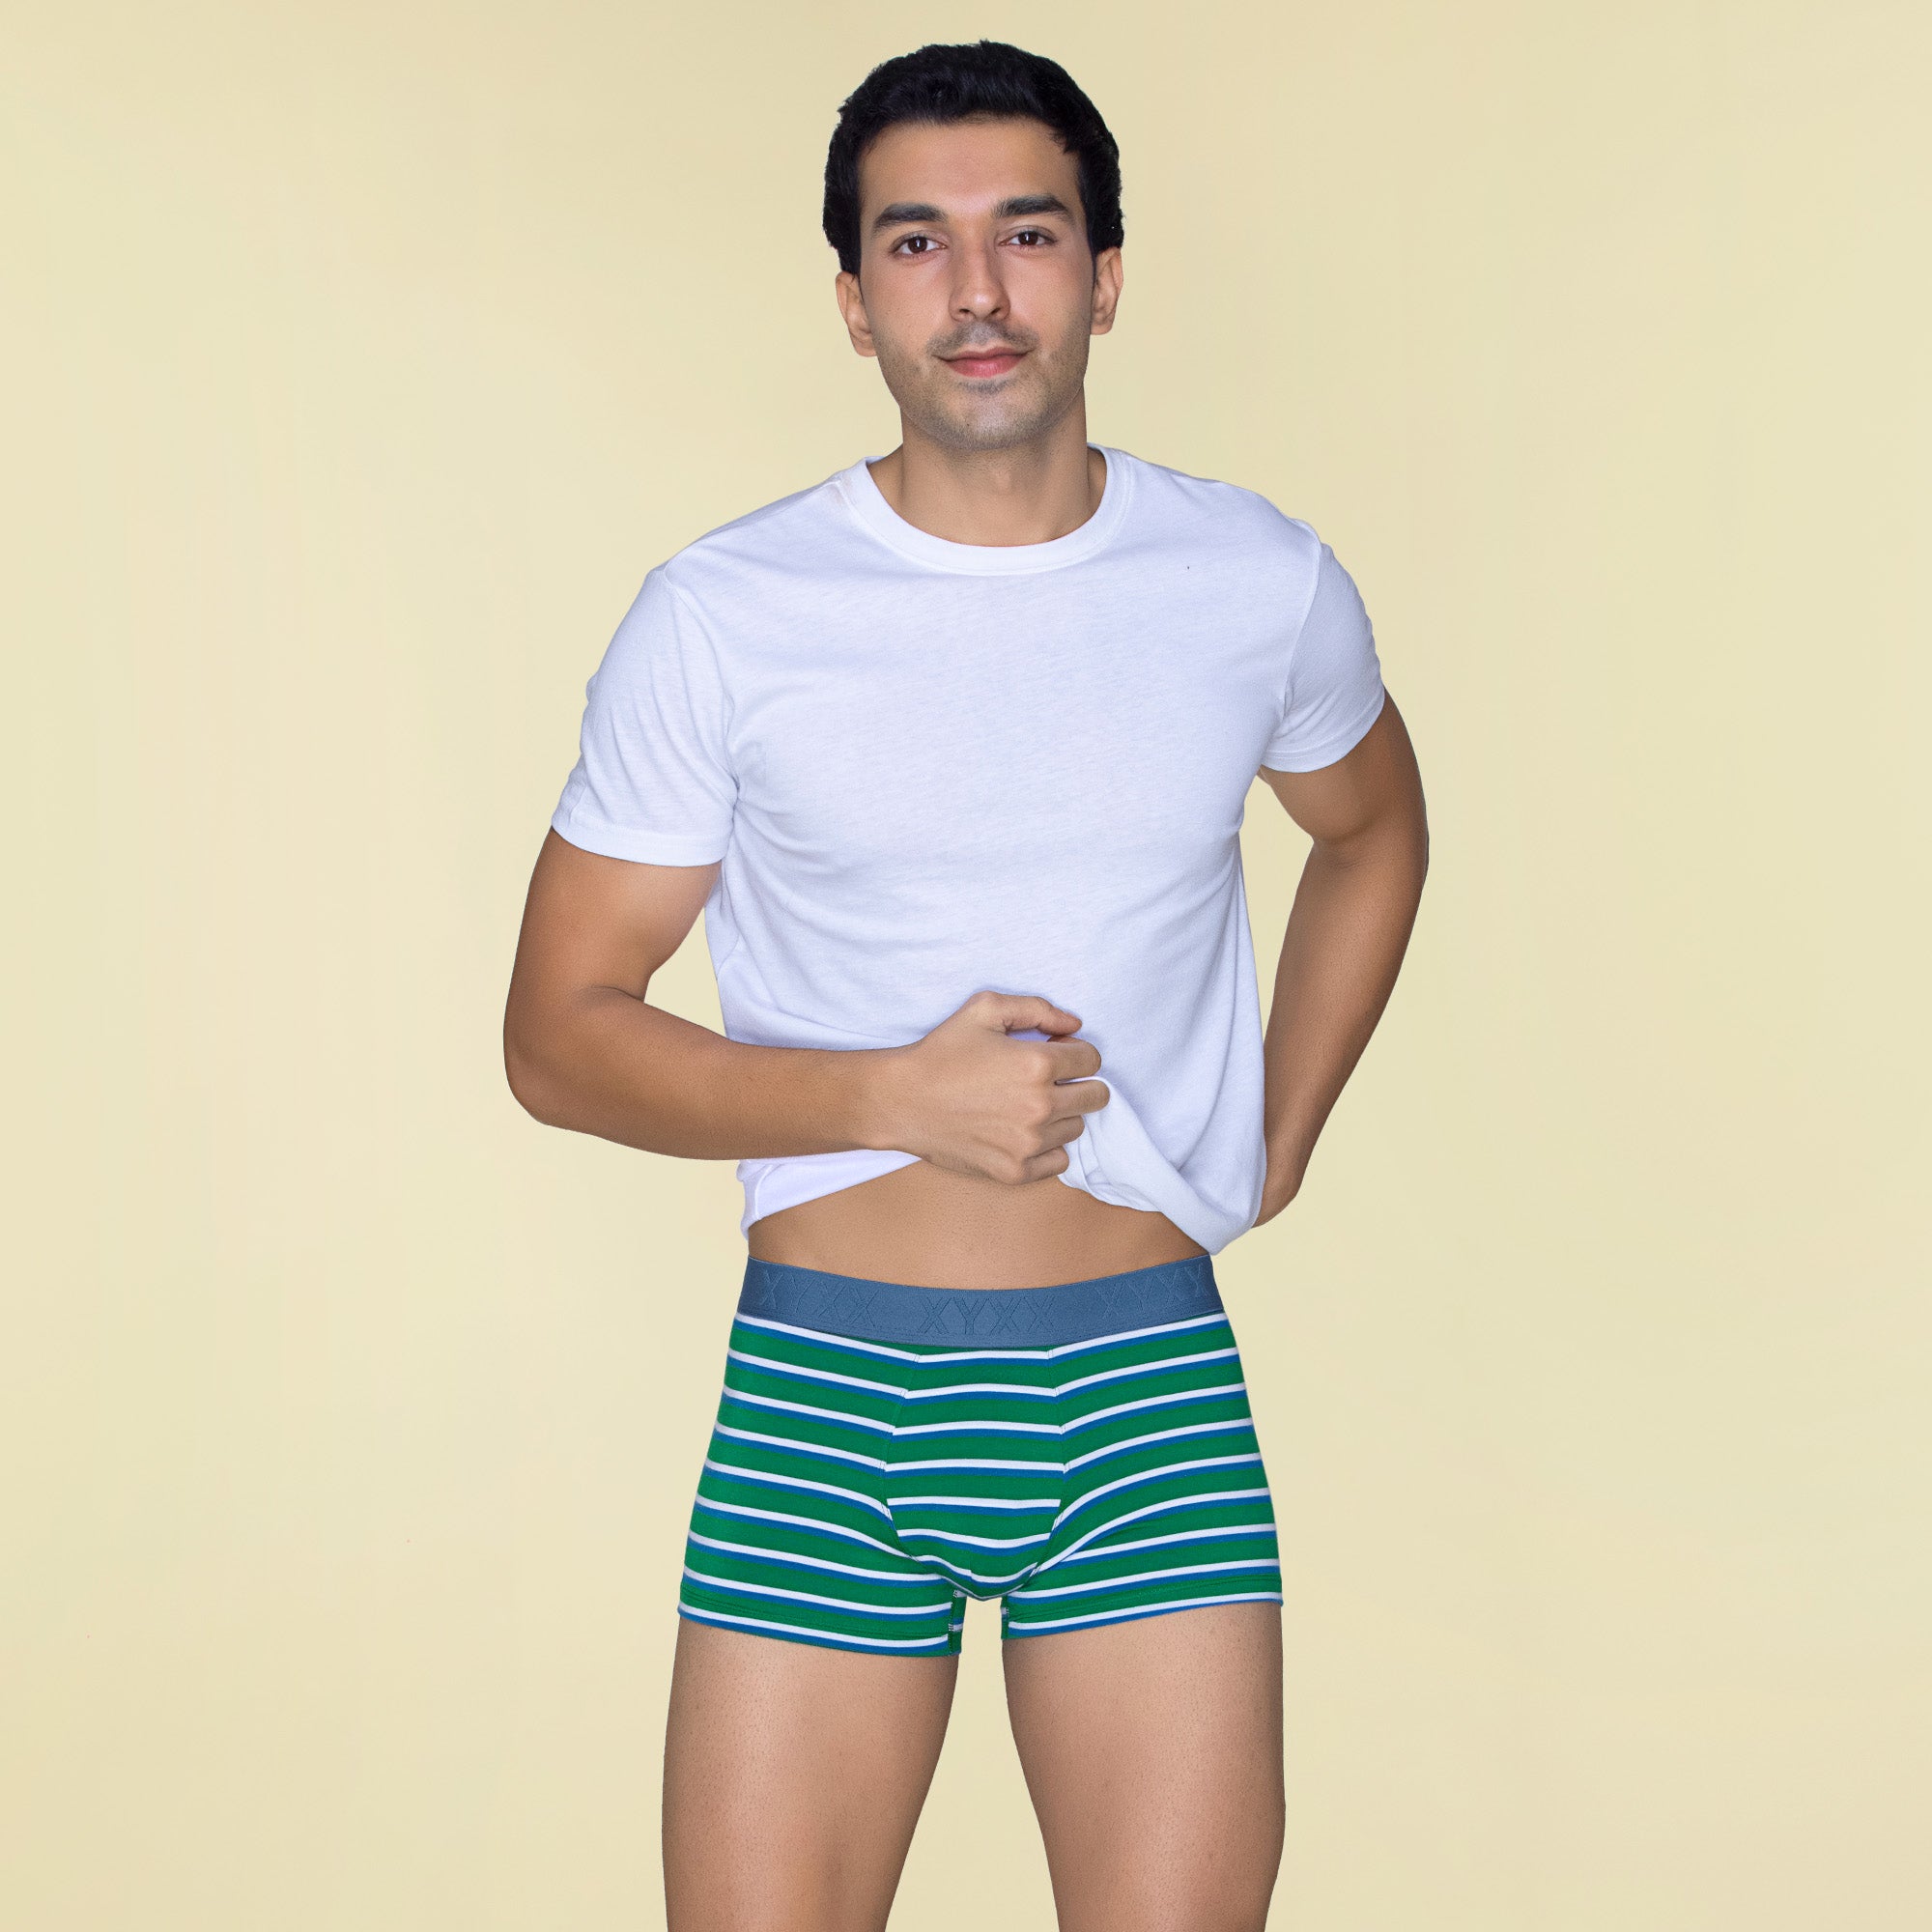 Linea Modal Trunks For Men Amazon Green -  XYXX Mens Apparels